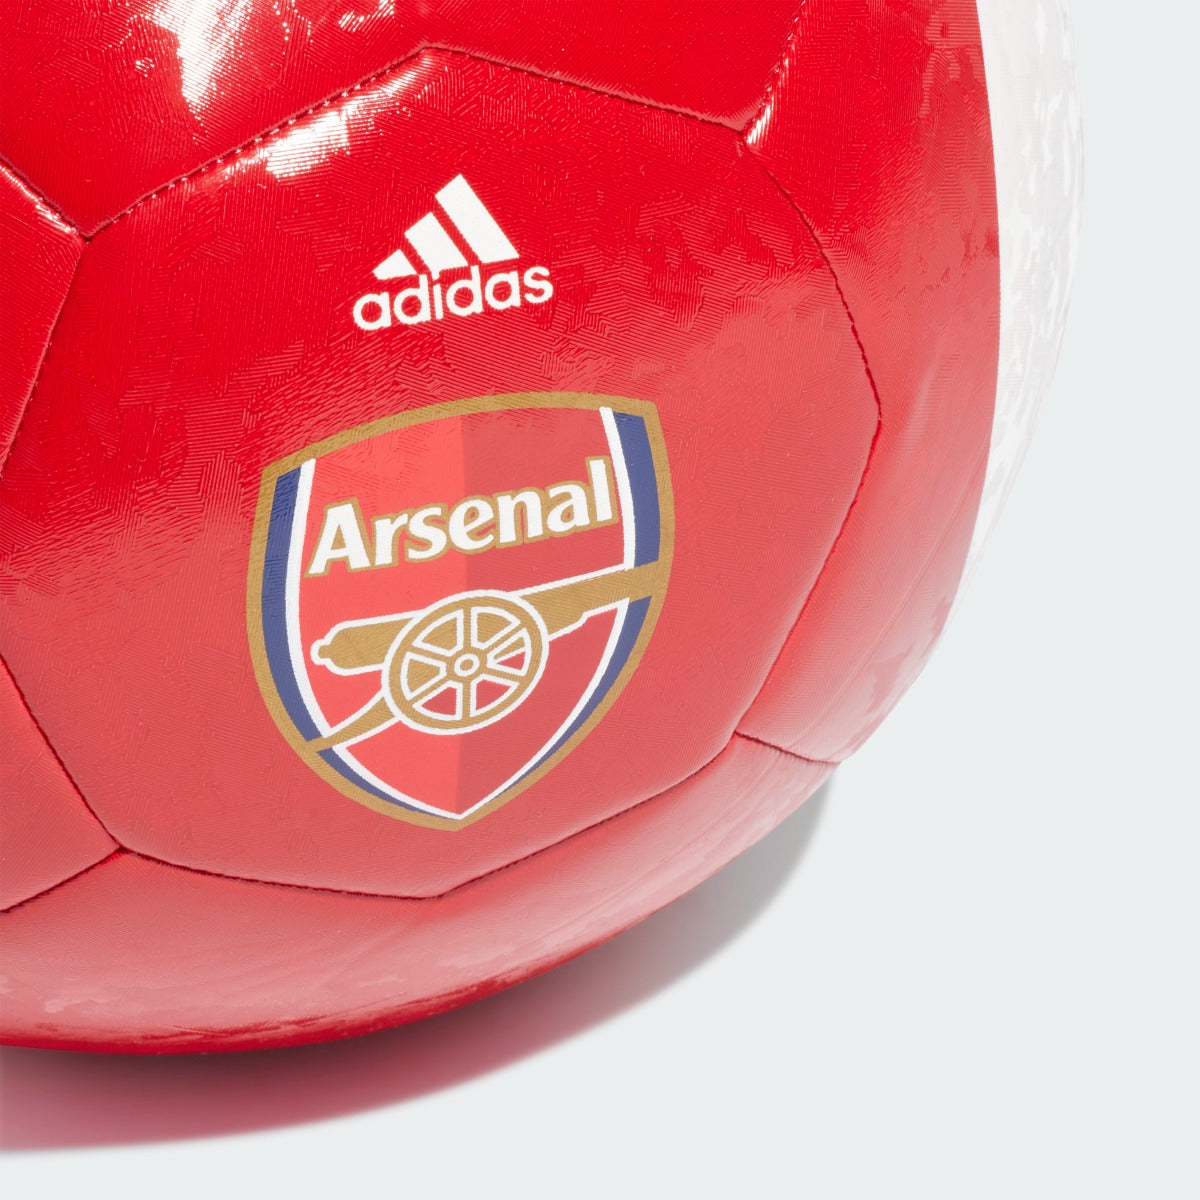 Adidas 2021-22 Arsenal Home Club Ball - Red-White (Detail 2)